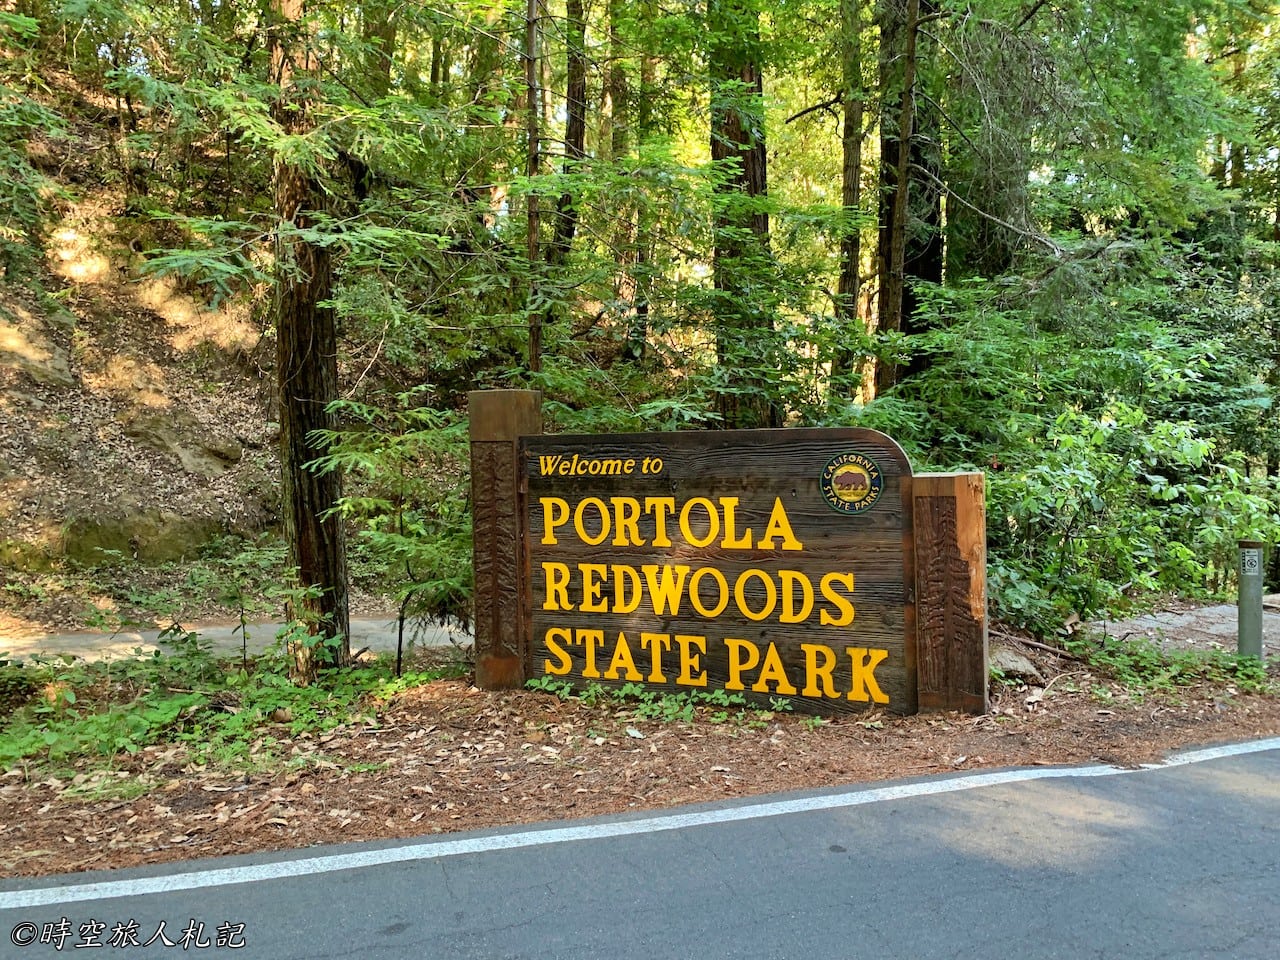 Portola redwood state park 1